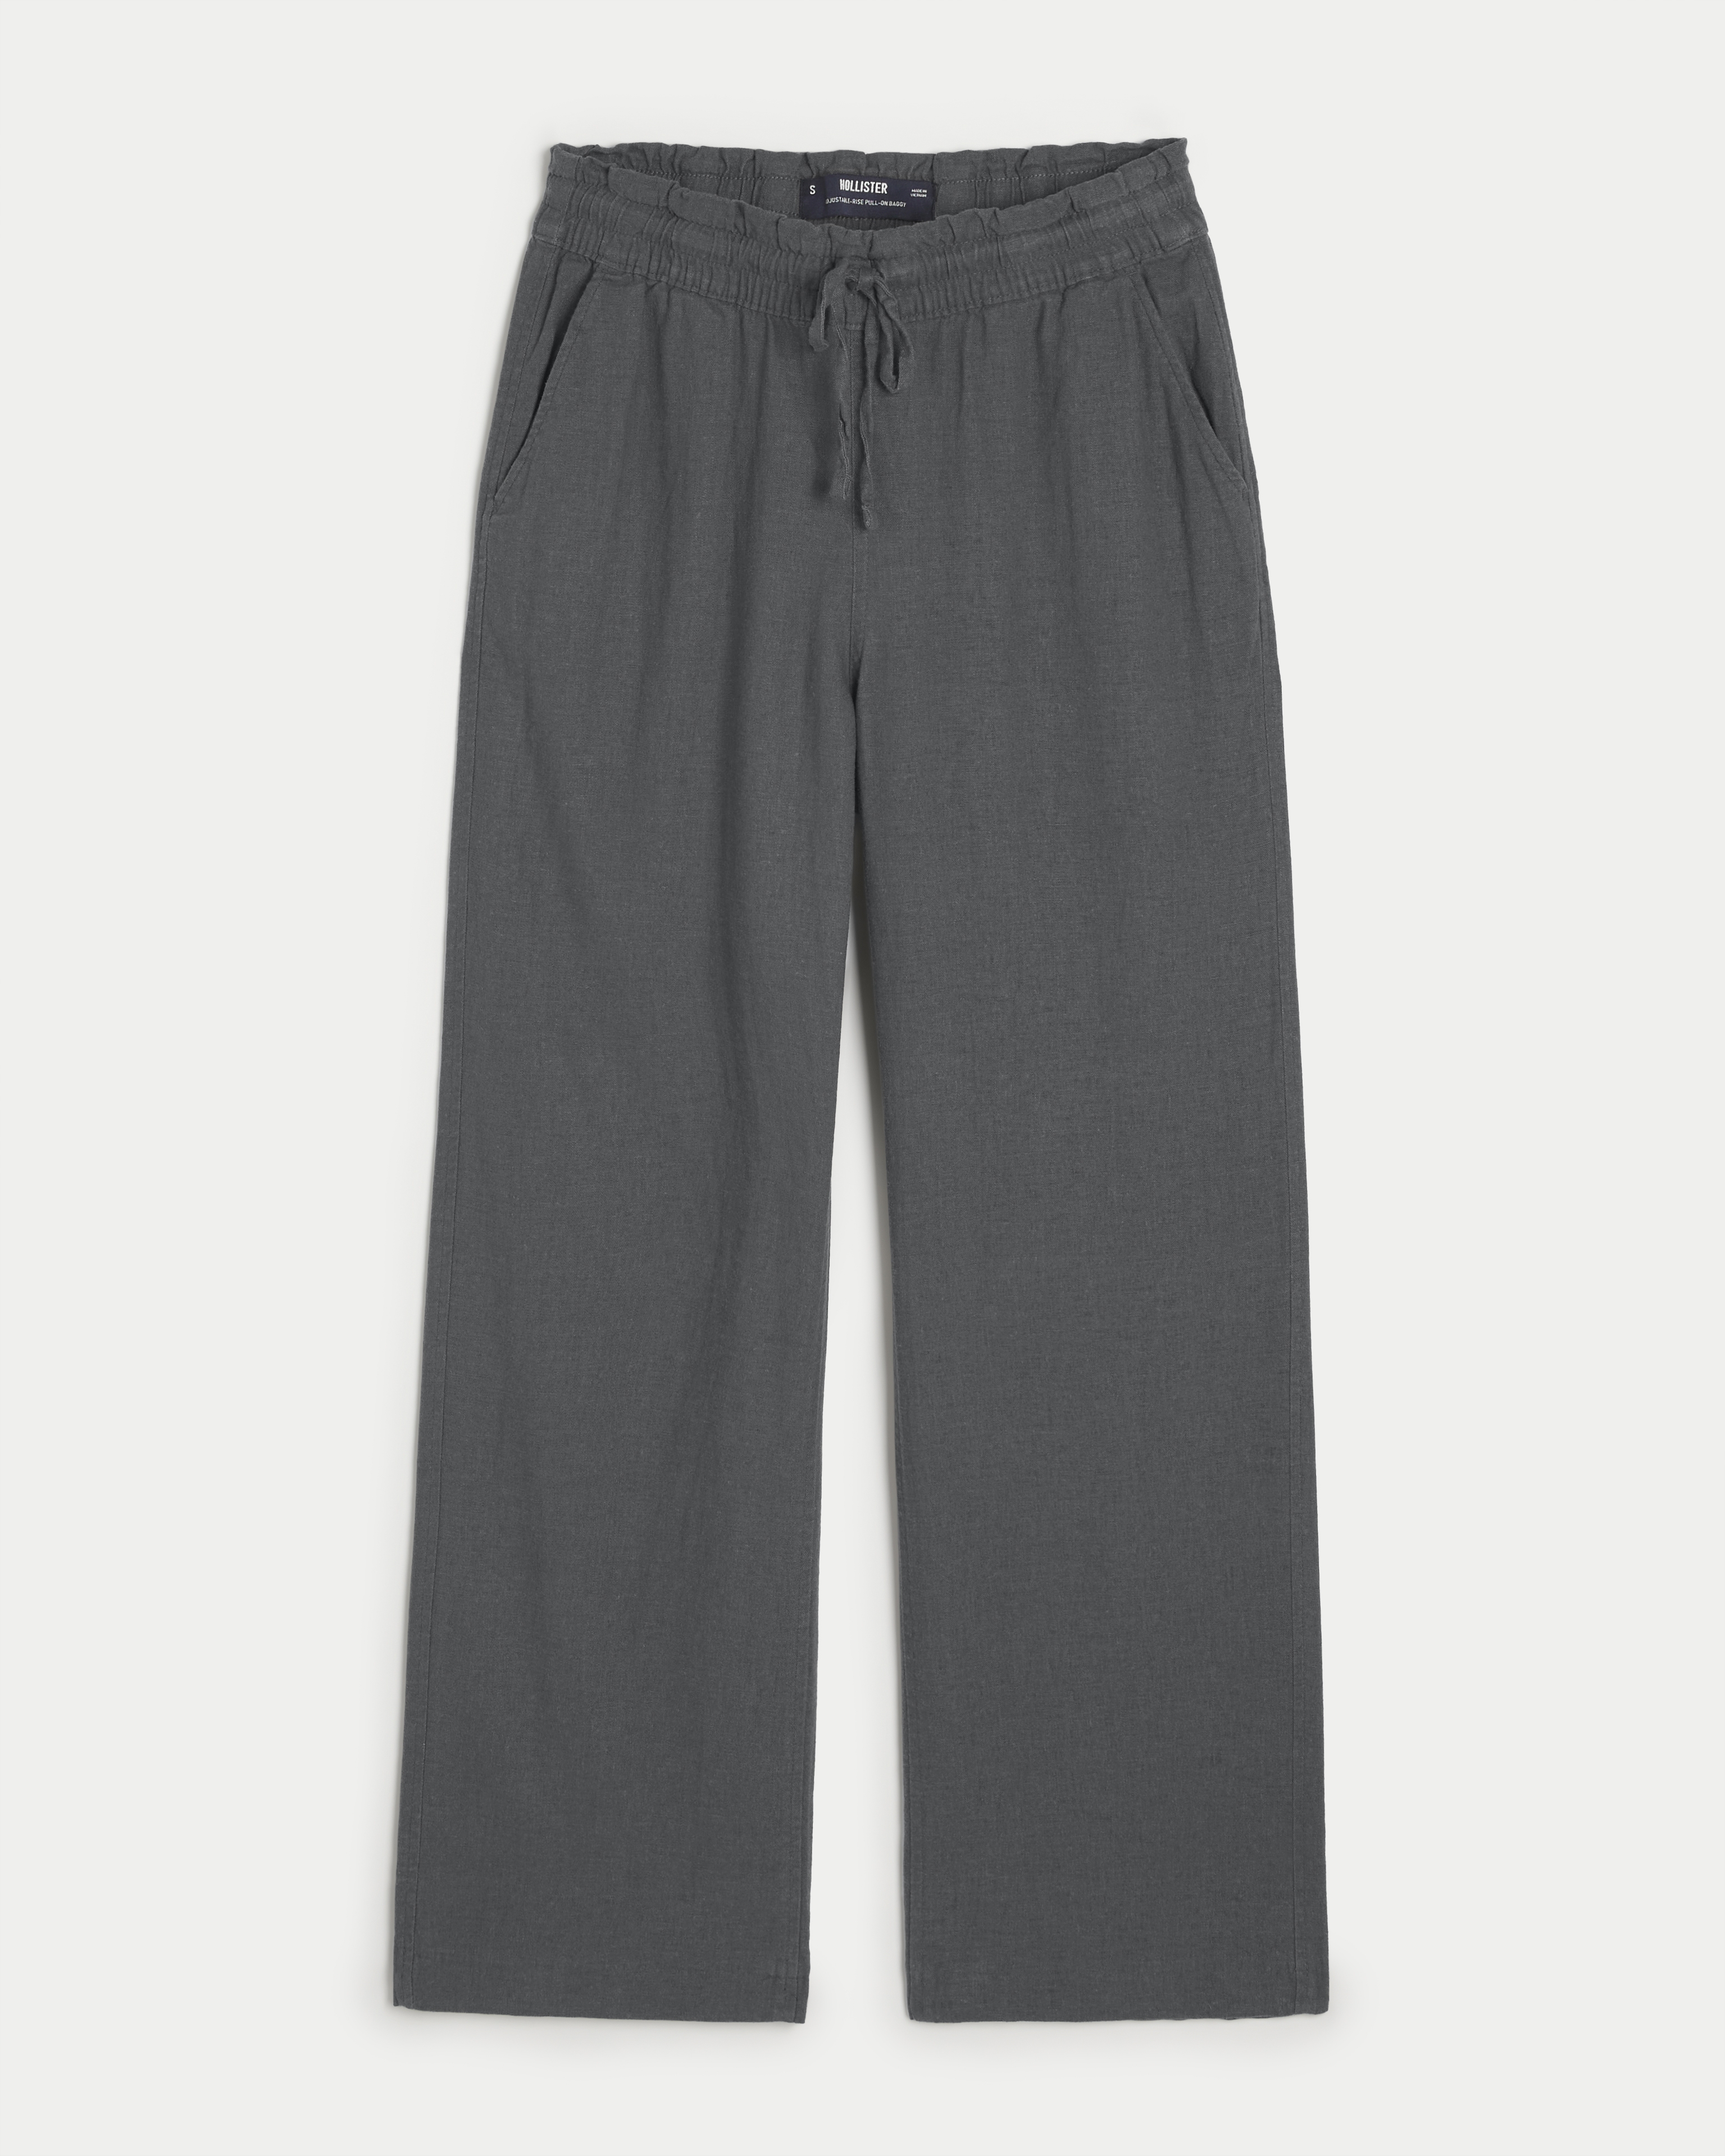 Adjustable Rise Pull-On Linen Blend Baggy Pants